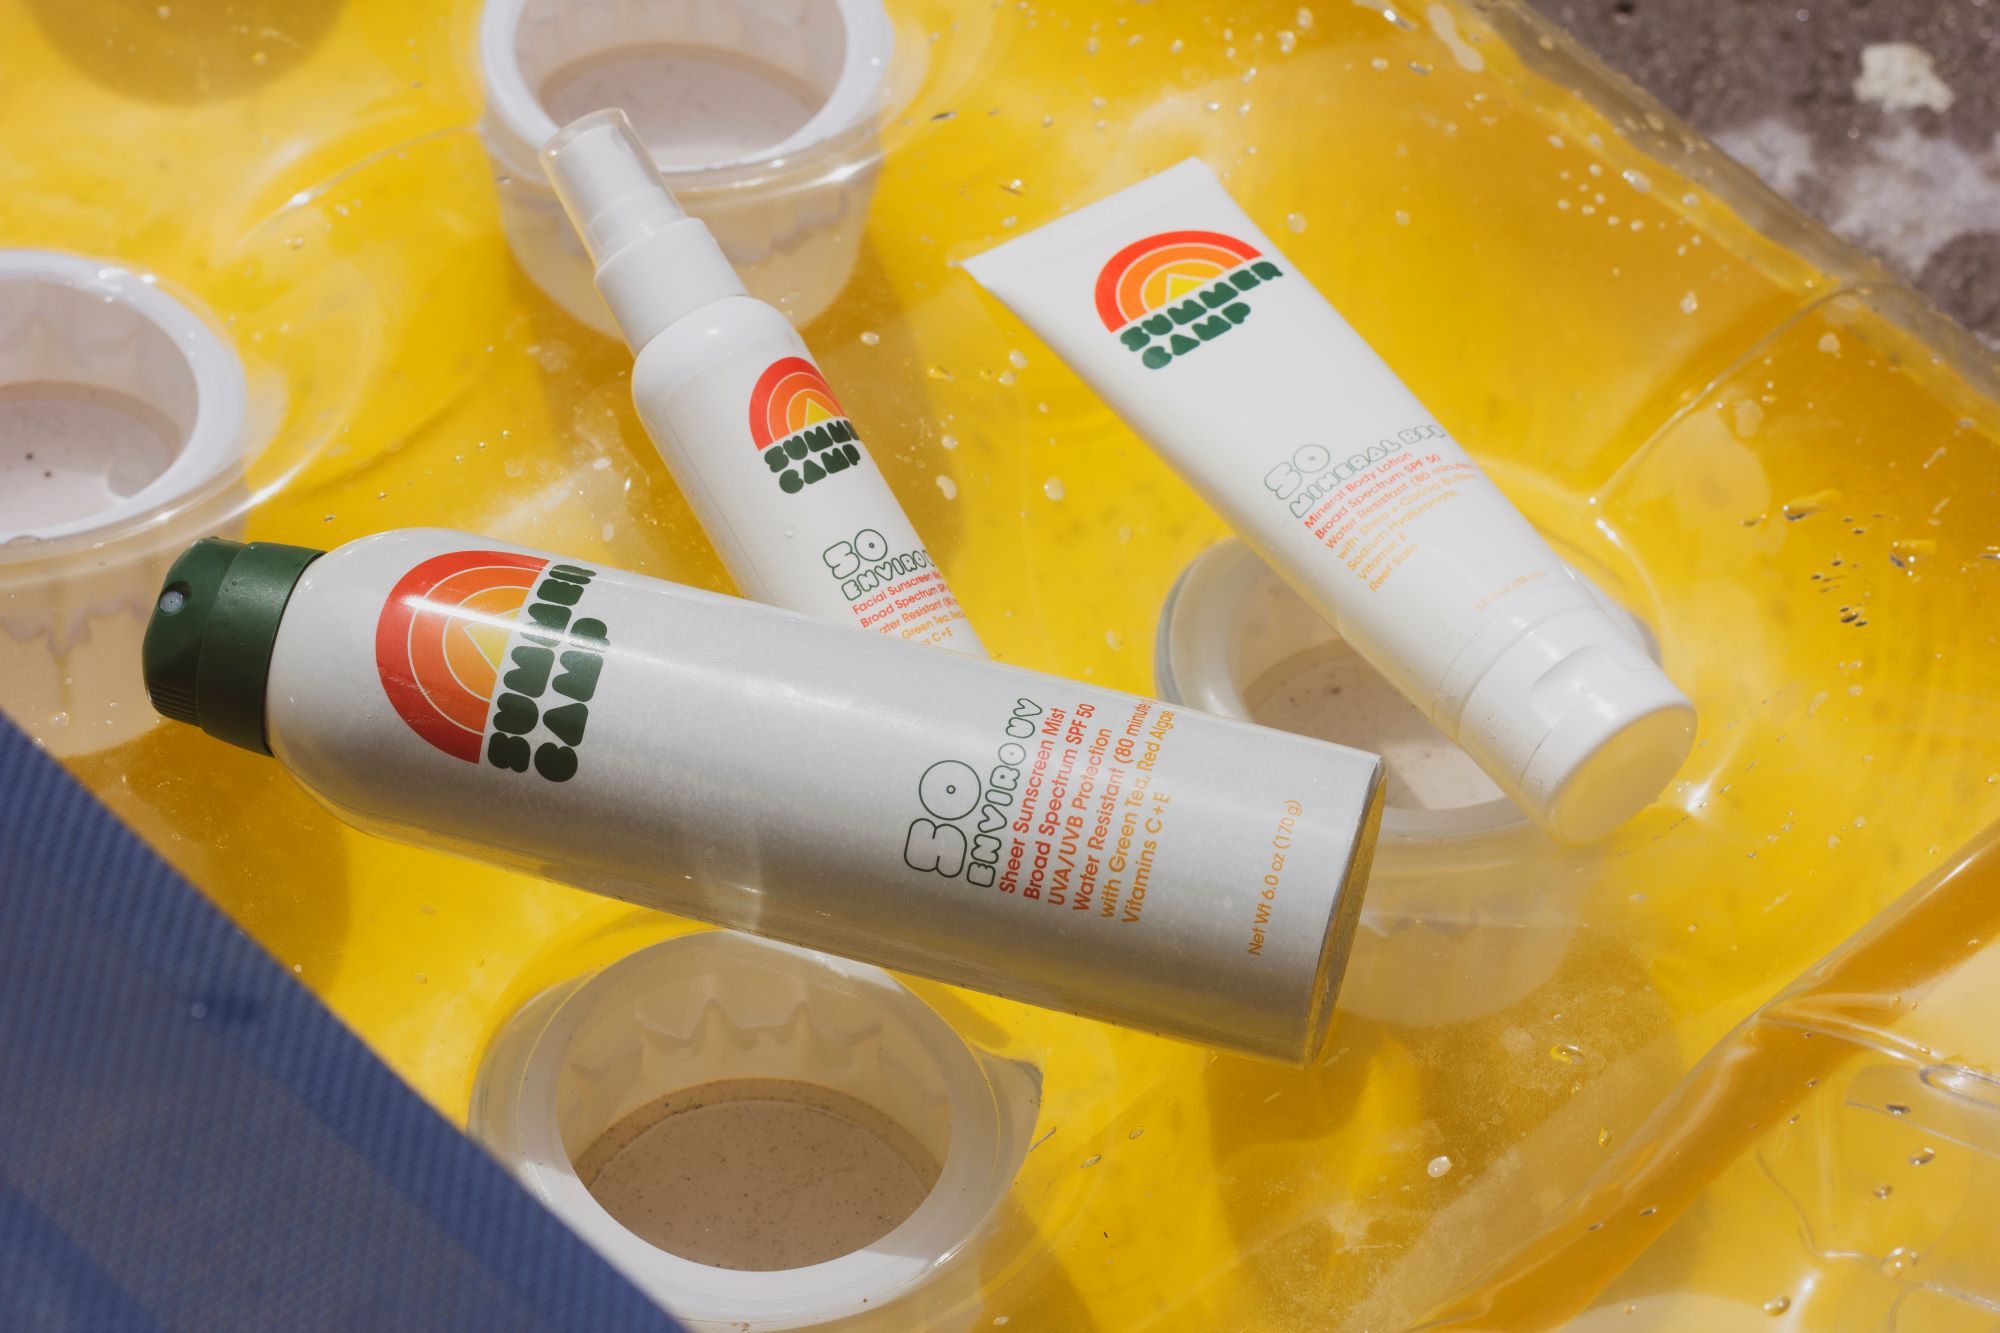 Summer Camp Enviro UV Water Resistant Sunscreen Mist for Face, SPF 50, 1.7 fl oz - image 4 of 5